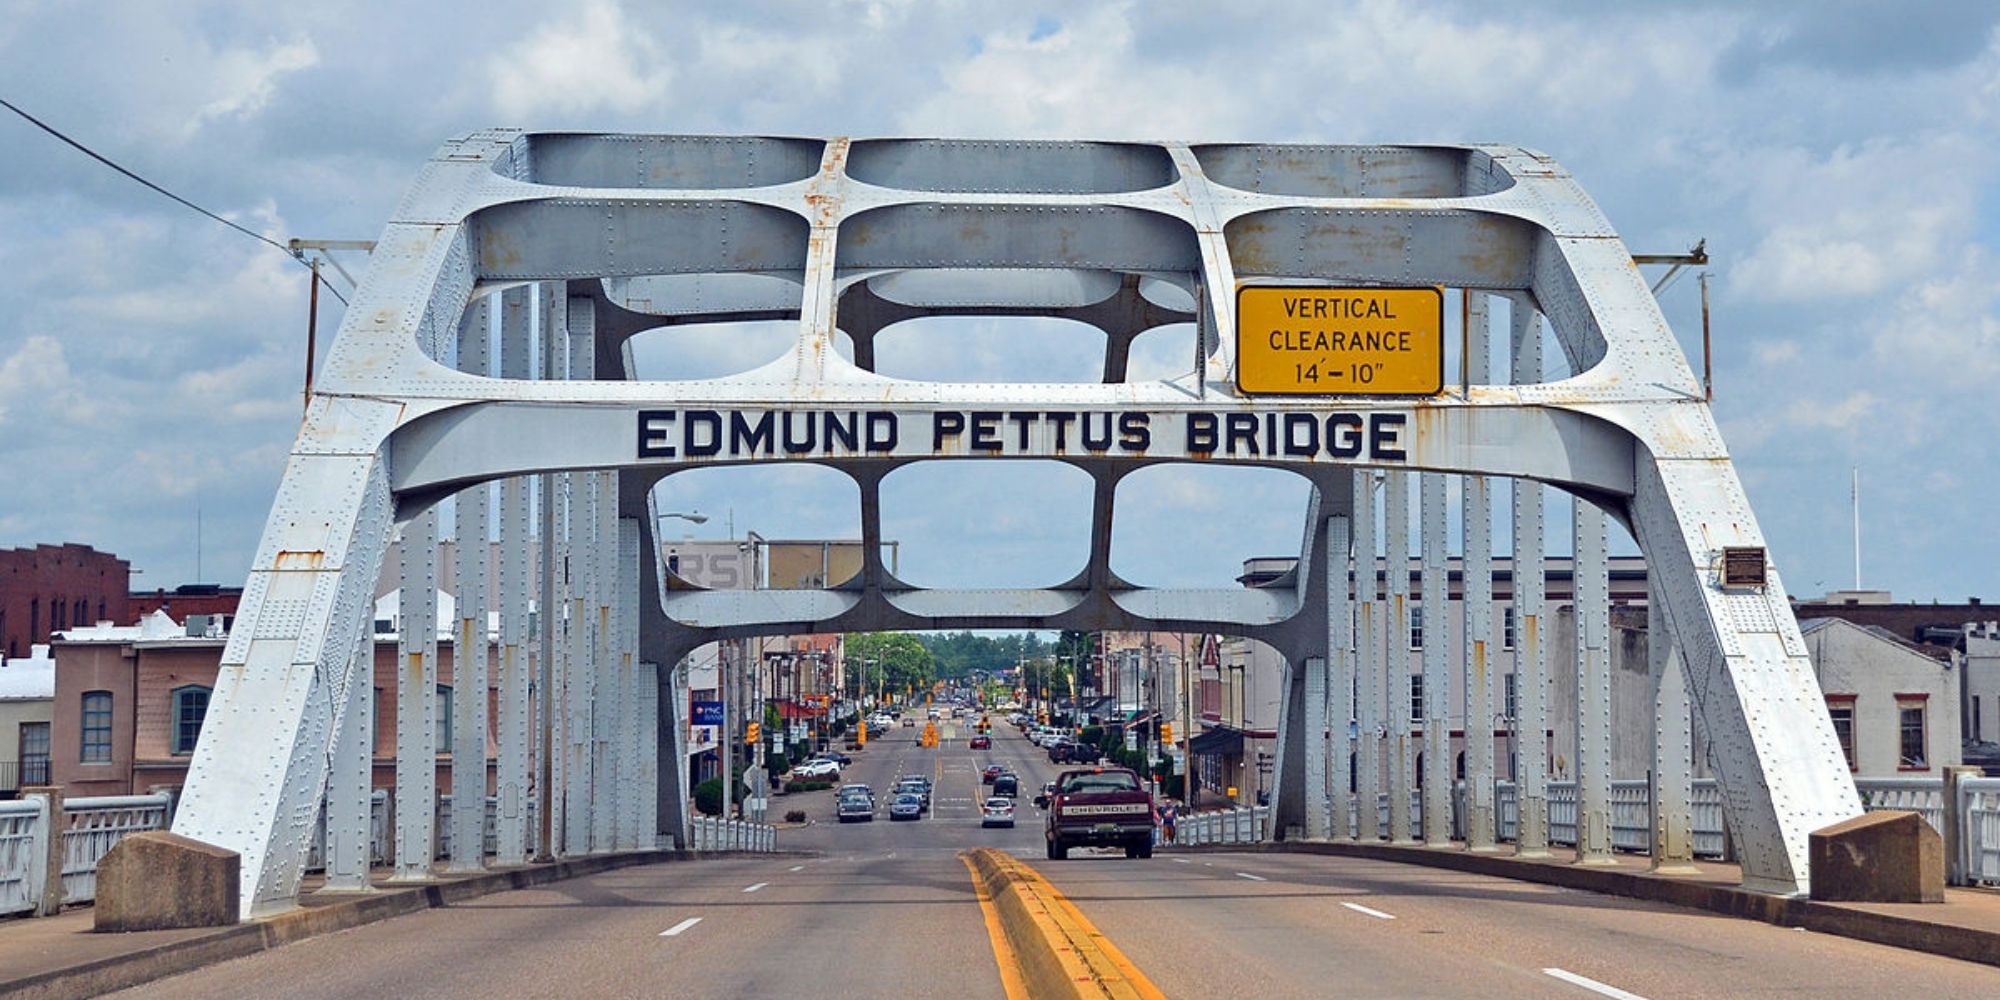 Photo credit: Edmund Pettus Bridge in Selma, Alabama. May 2015 © Clément Bardot Licensed via Creative Commons Attribution-Share Alike 4.0 Internationa